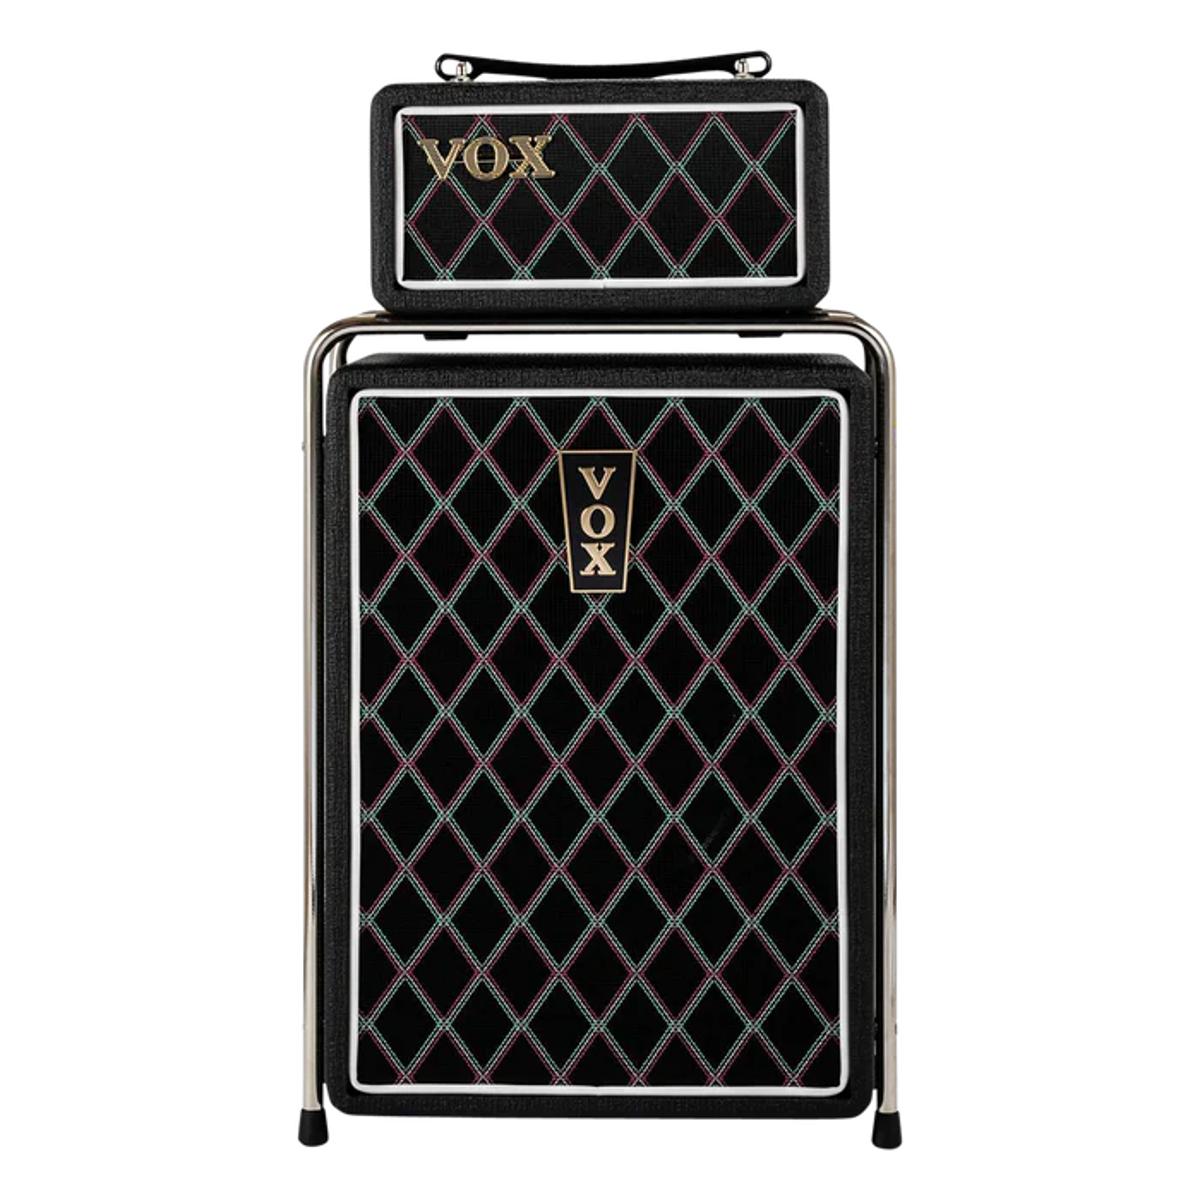 VOX MSB50 Mini SuperBeetle Bass Guitar Amplifier